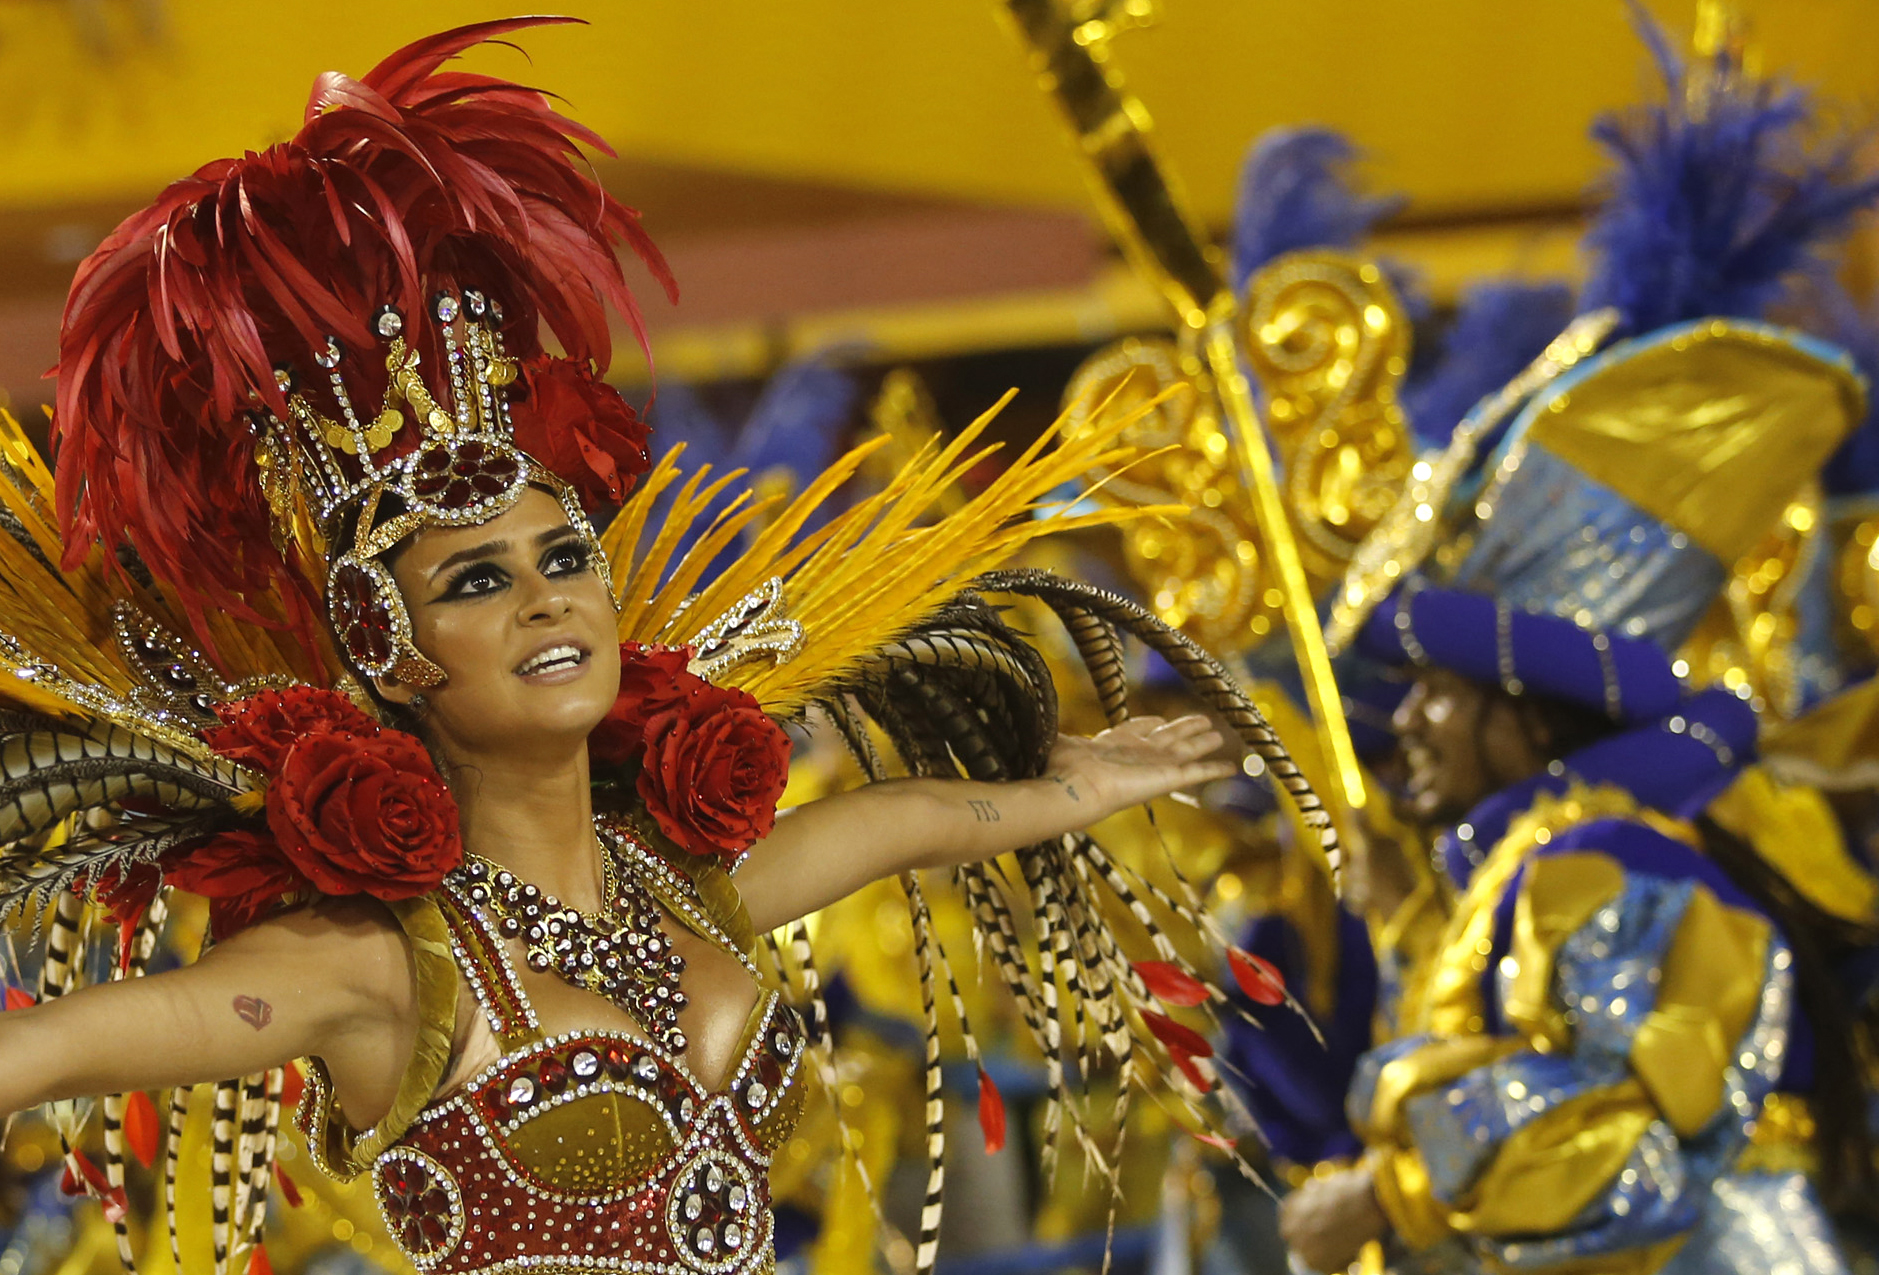 Rio rio brazilian. Карнавал в Рио-де-Жанейро. Карнавал Рио (Rio Carnival). Самба Рио де Жанейро. Бразильский карнавал в Рио-де-Жанейро Самба.